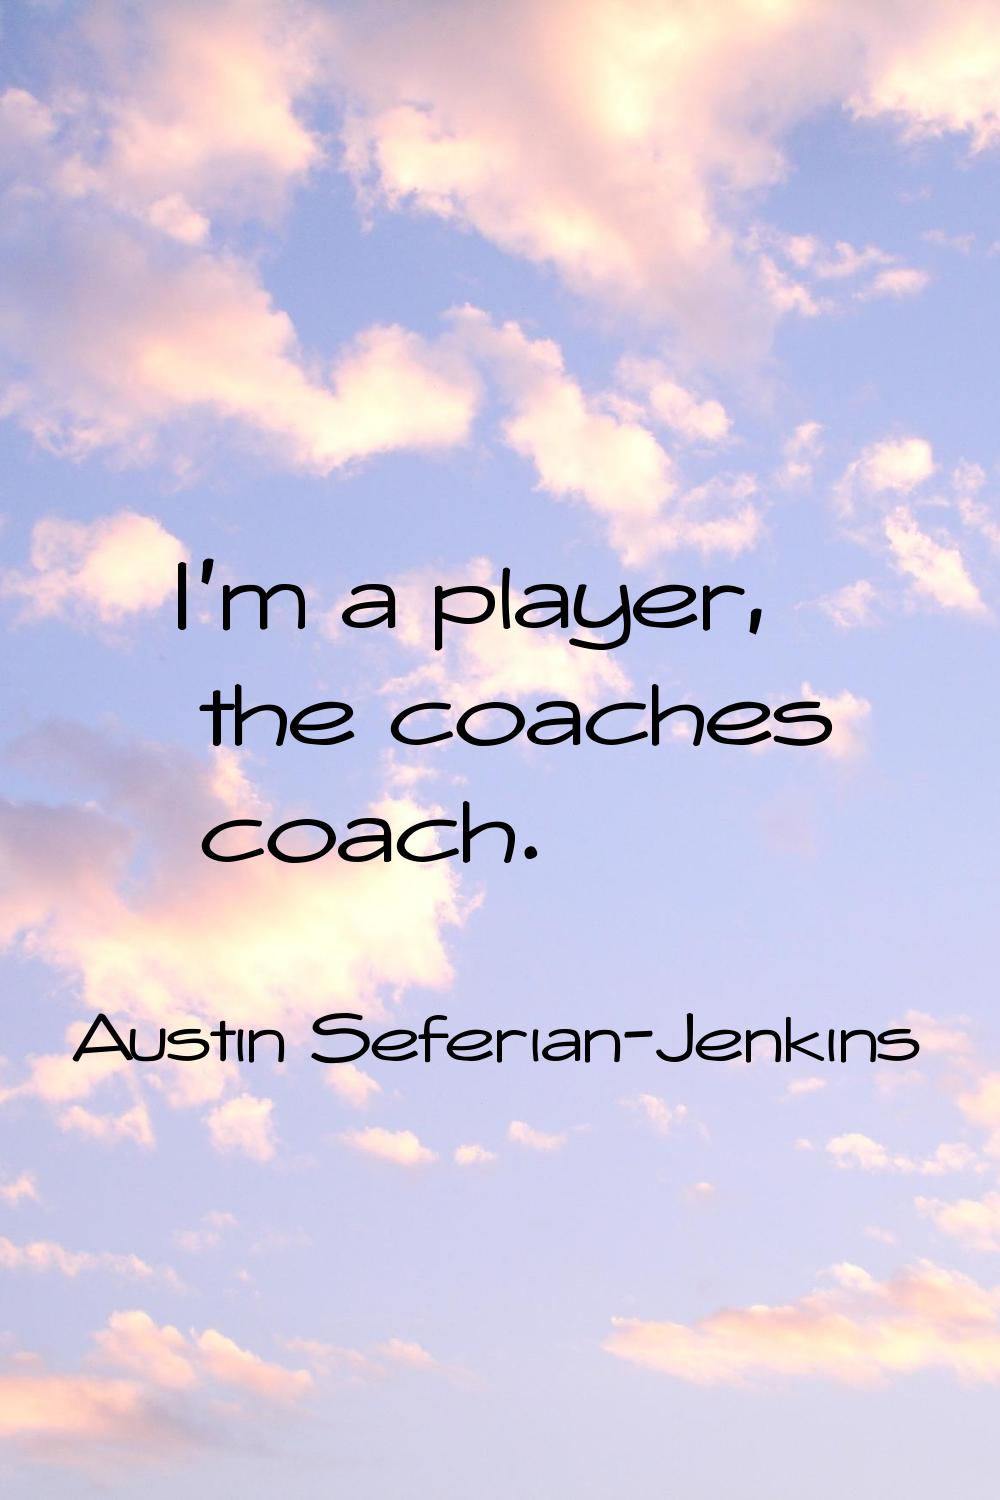 I'm a player, the coaches coach.